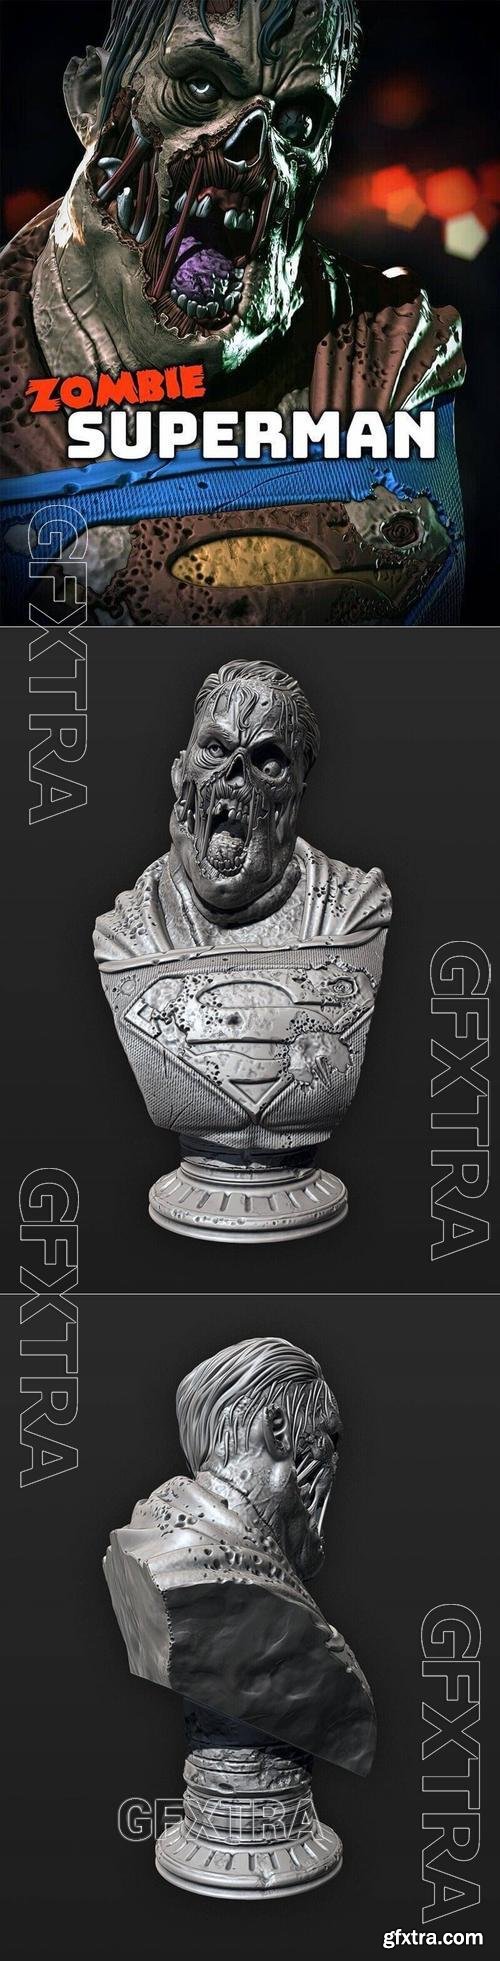 Eastman - Zombie Superman Bust – 3D Print Model » GFxtra